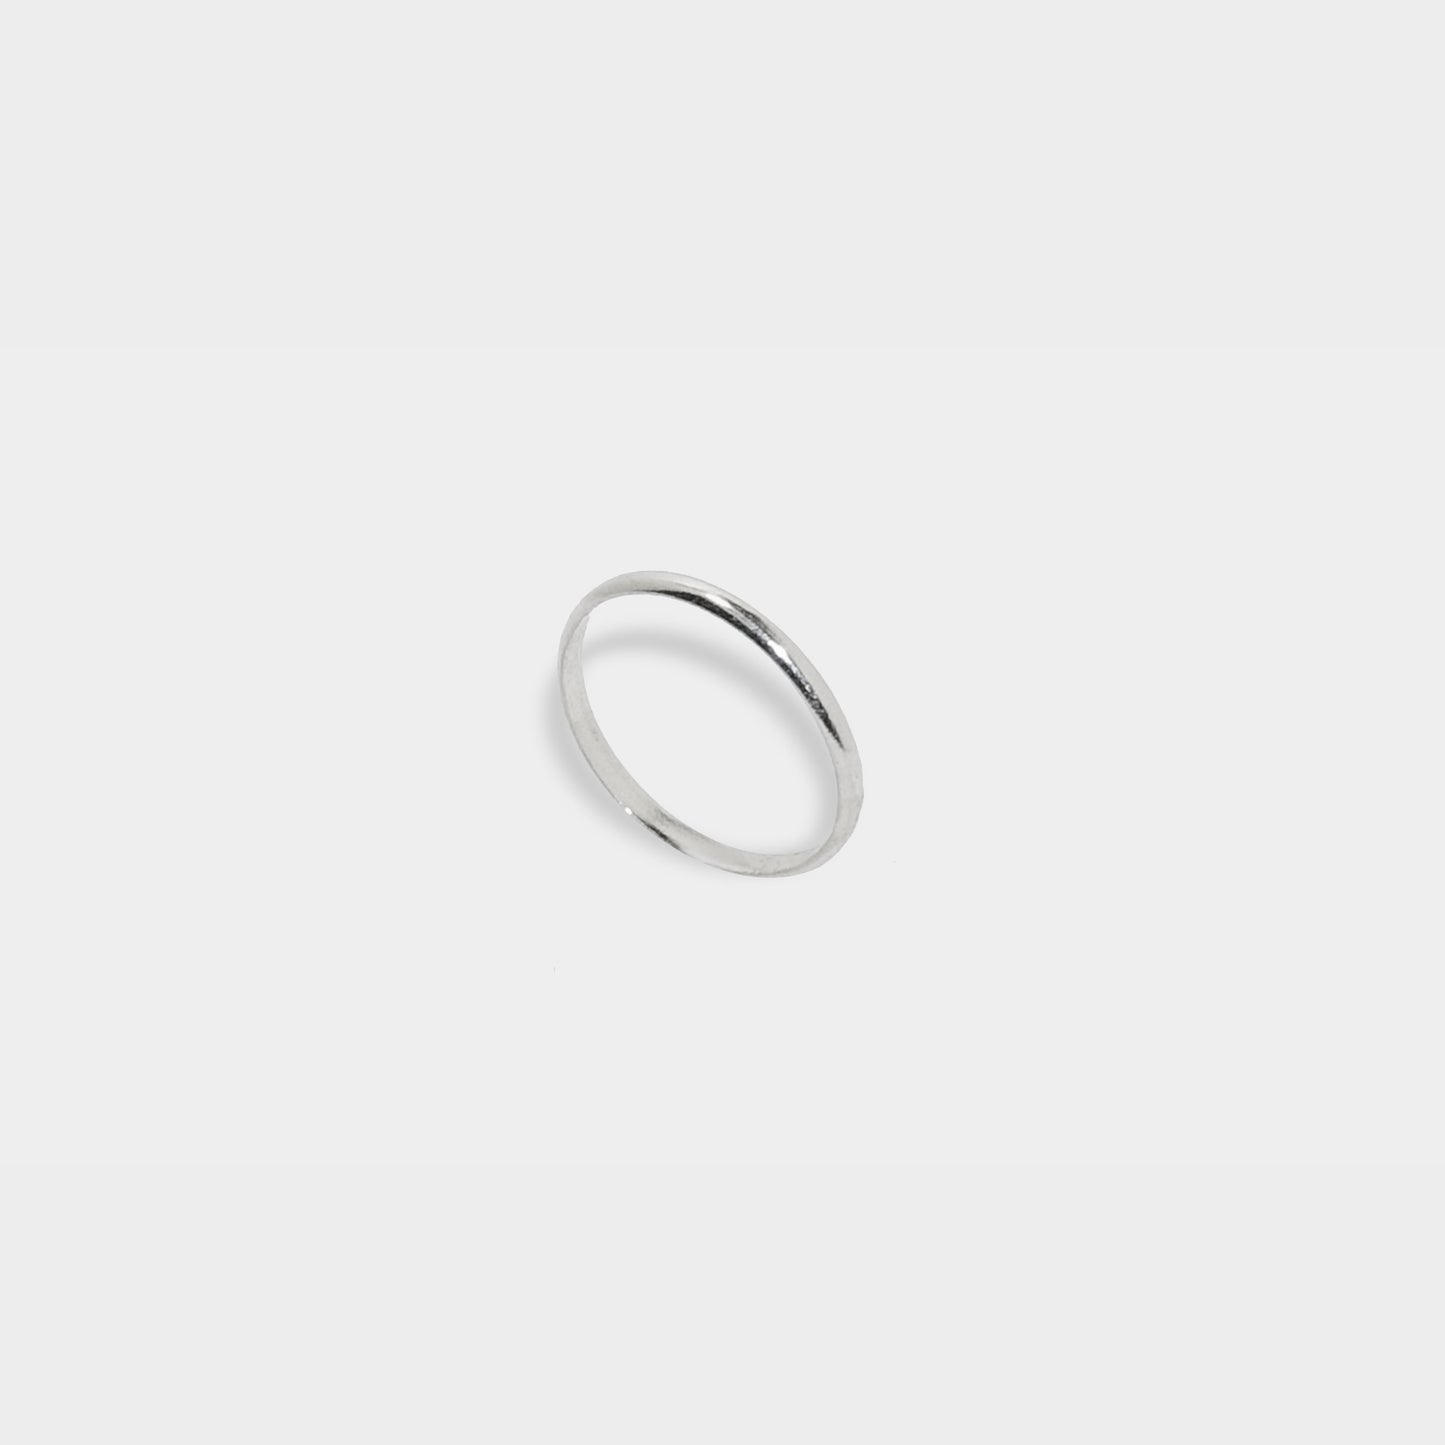 【經典日常】簡約一線戒/ 925純銀/925純銀鍍20K金  Silver Band Ring